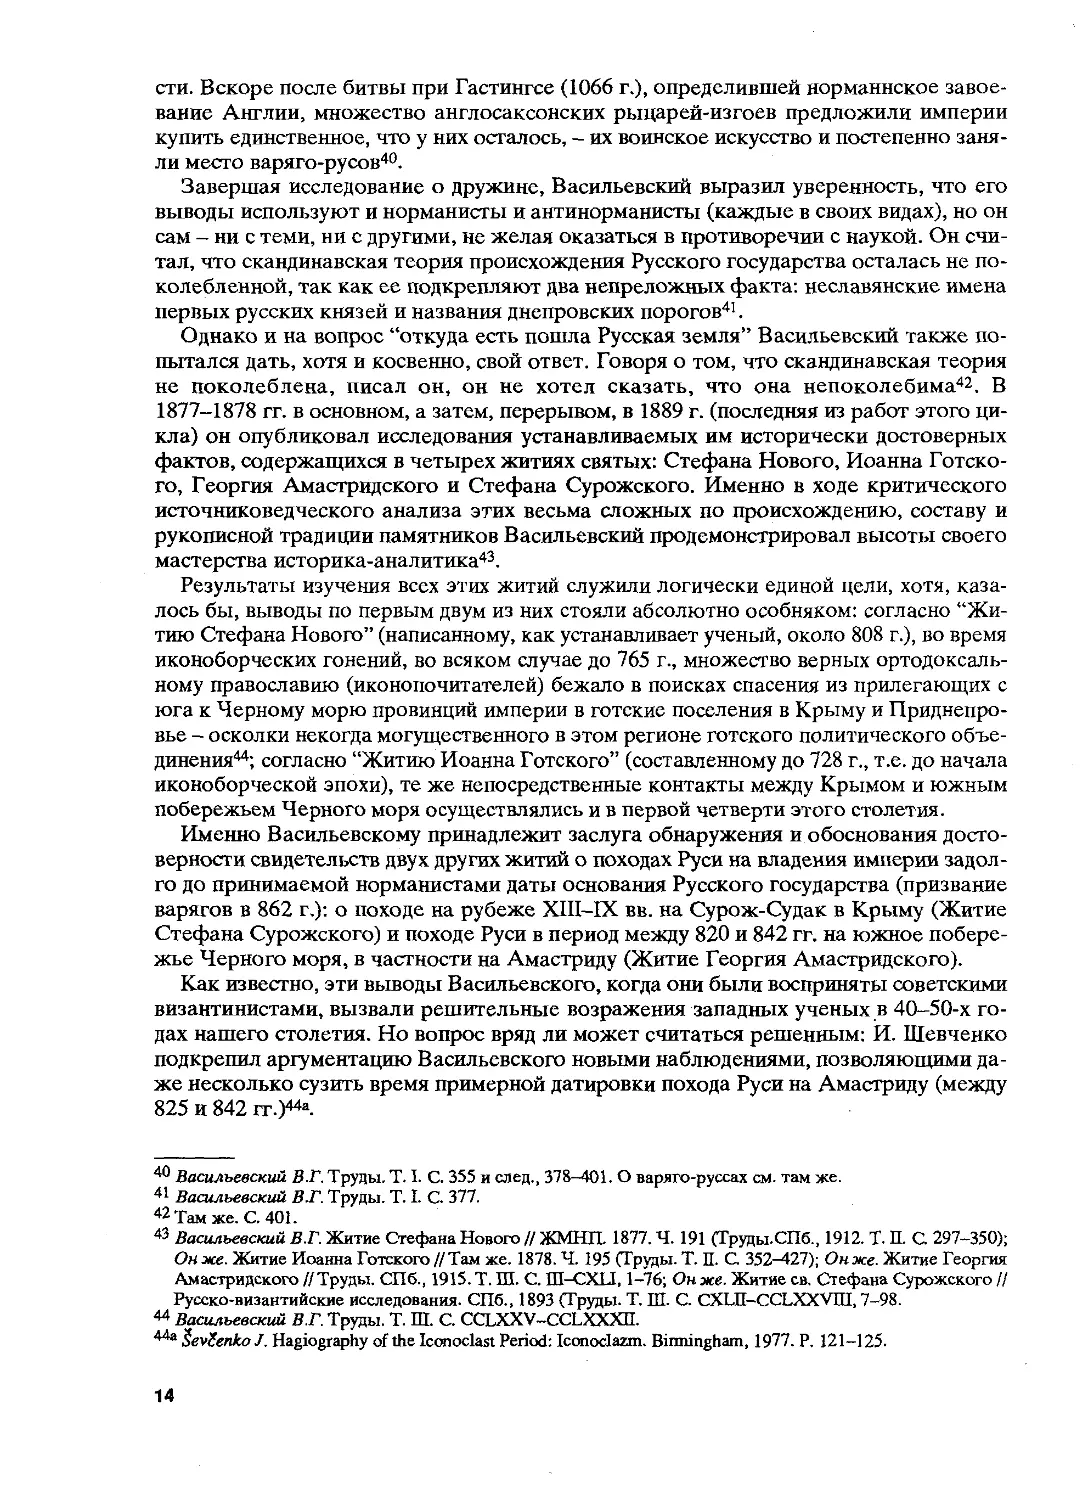 BB 55_1 Á994ù 14.pdf